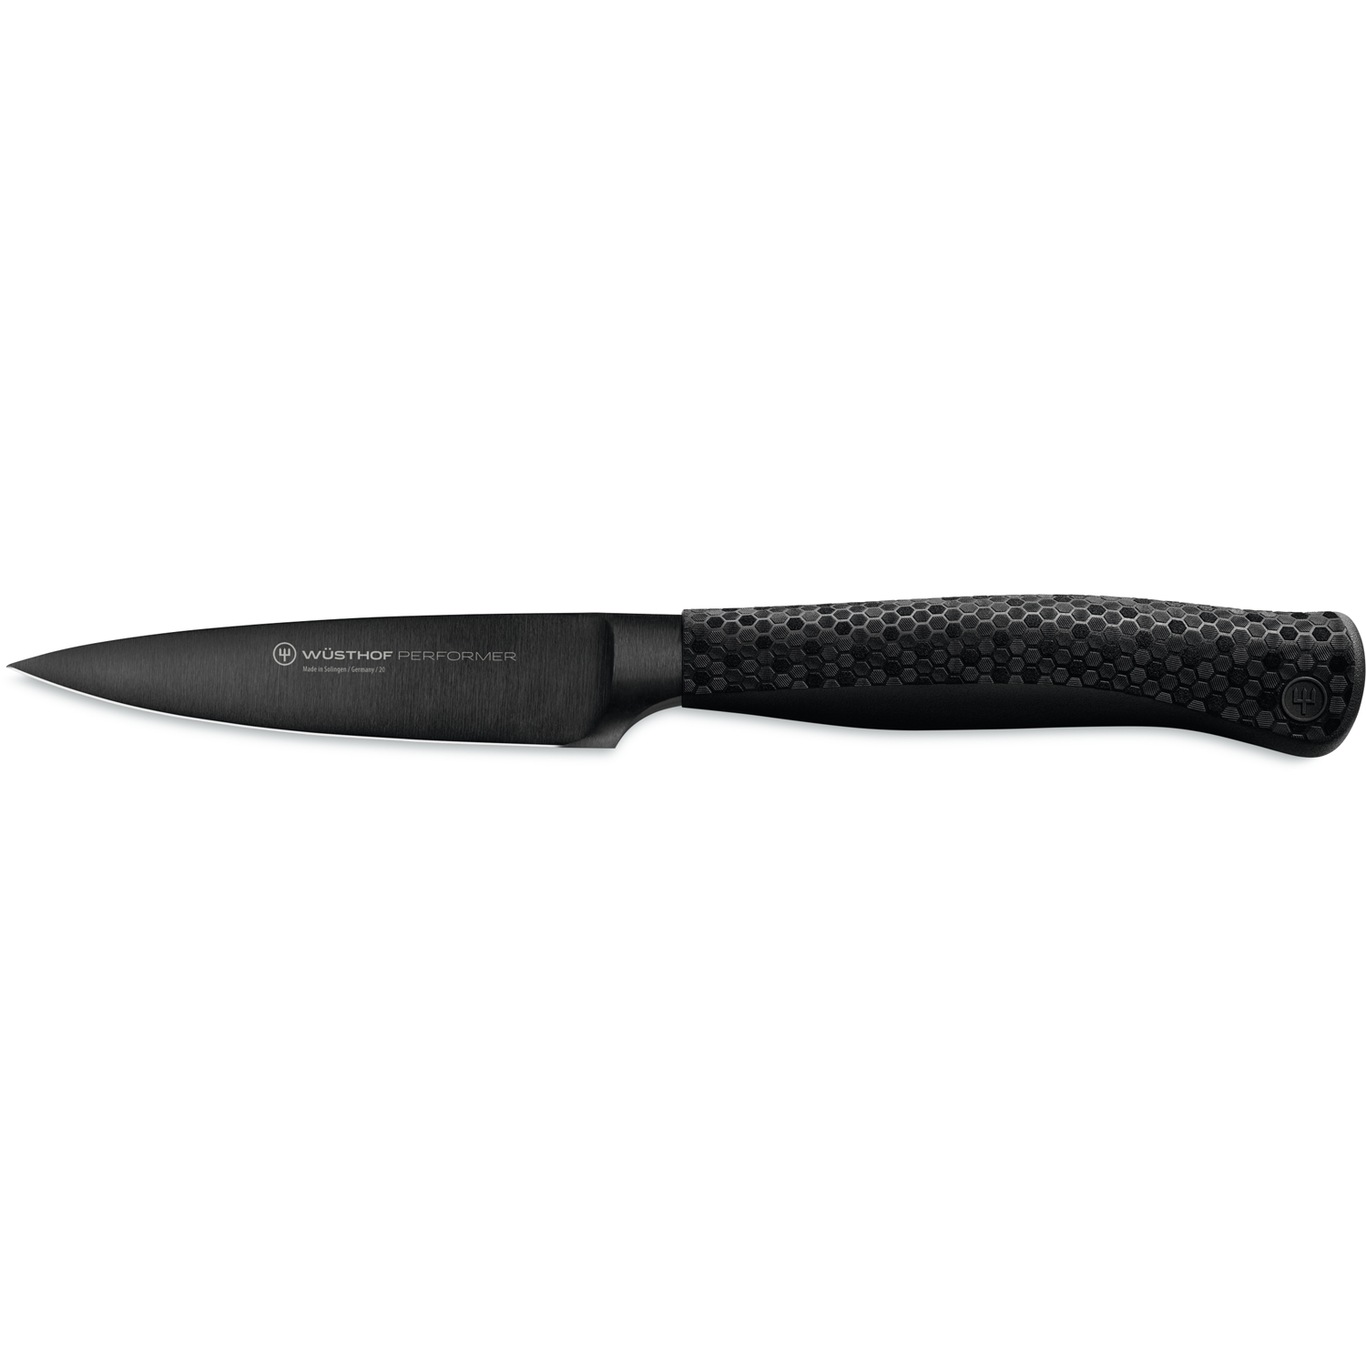 https://royaldesign.com/image/2/wusthof-performer-paring-knife-9-cm-0?w=800&quality=80